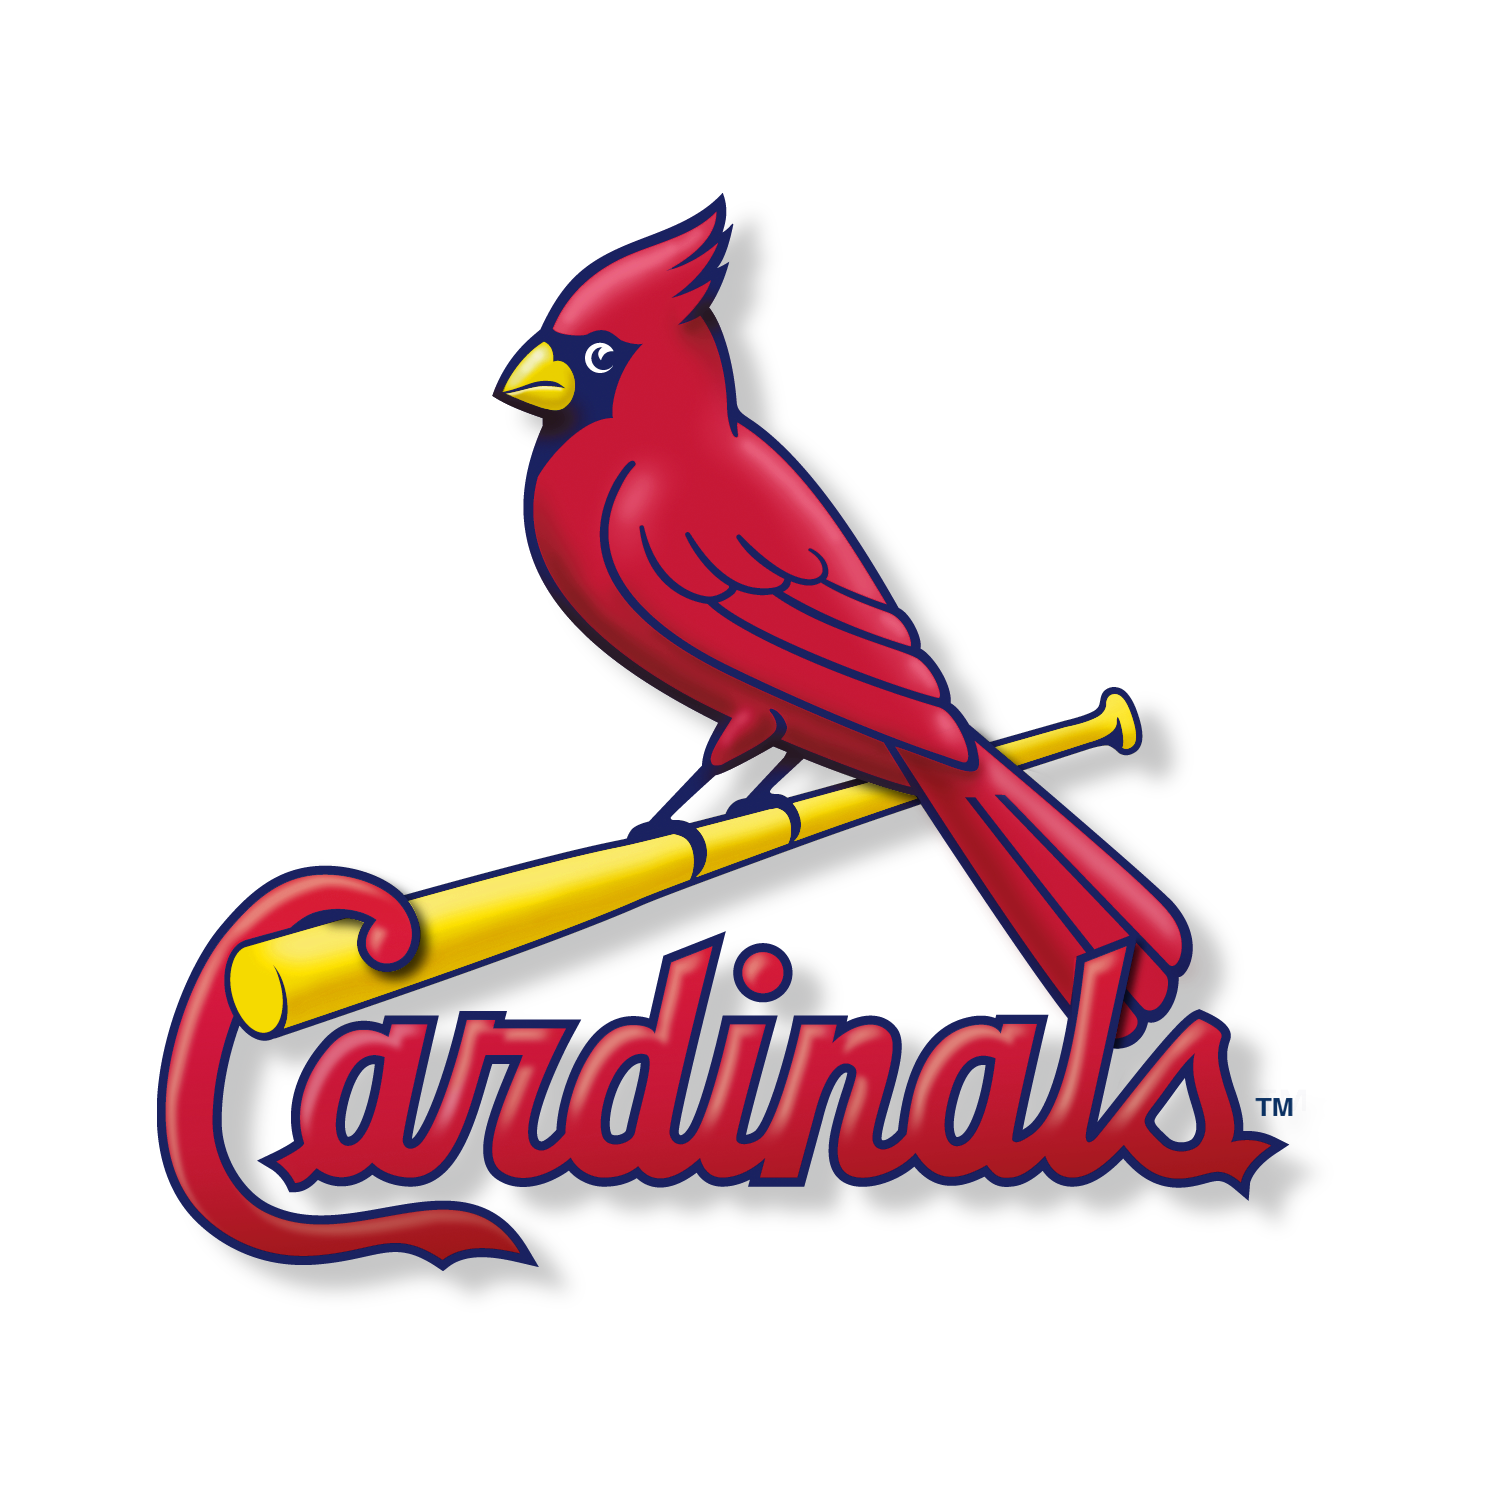 Cardinals Baseball In St Louis | NAR Media Kit